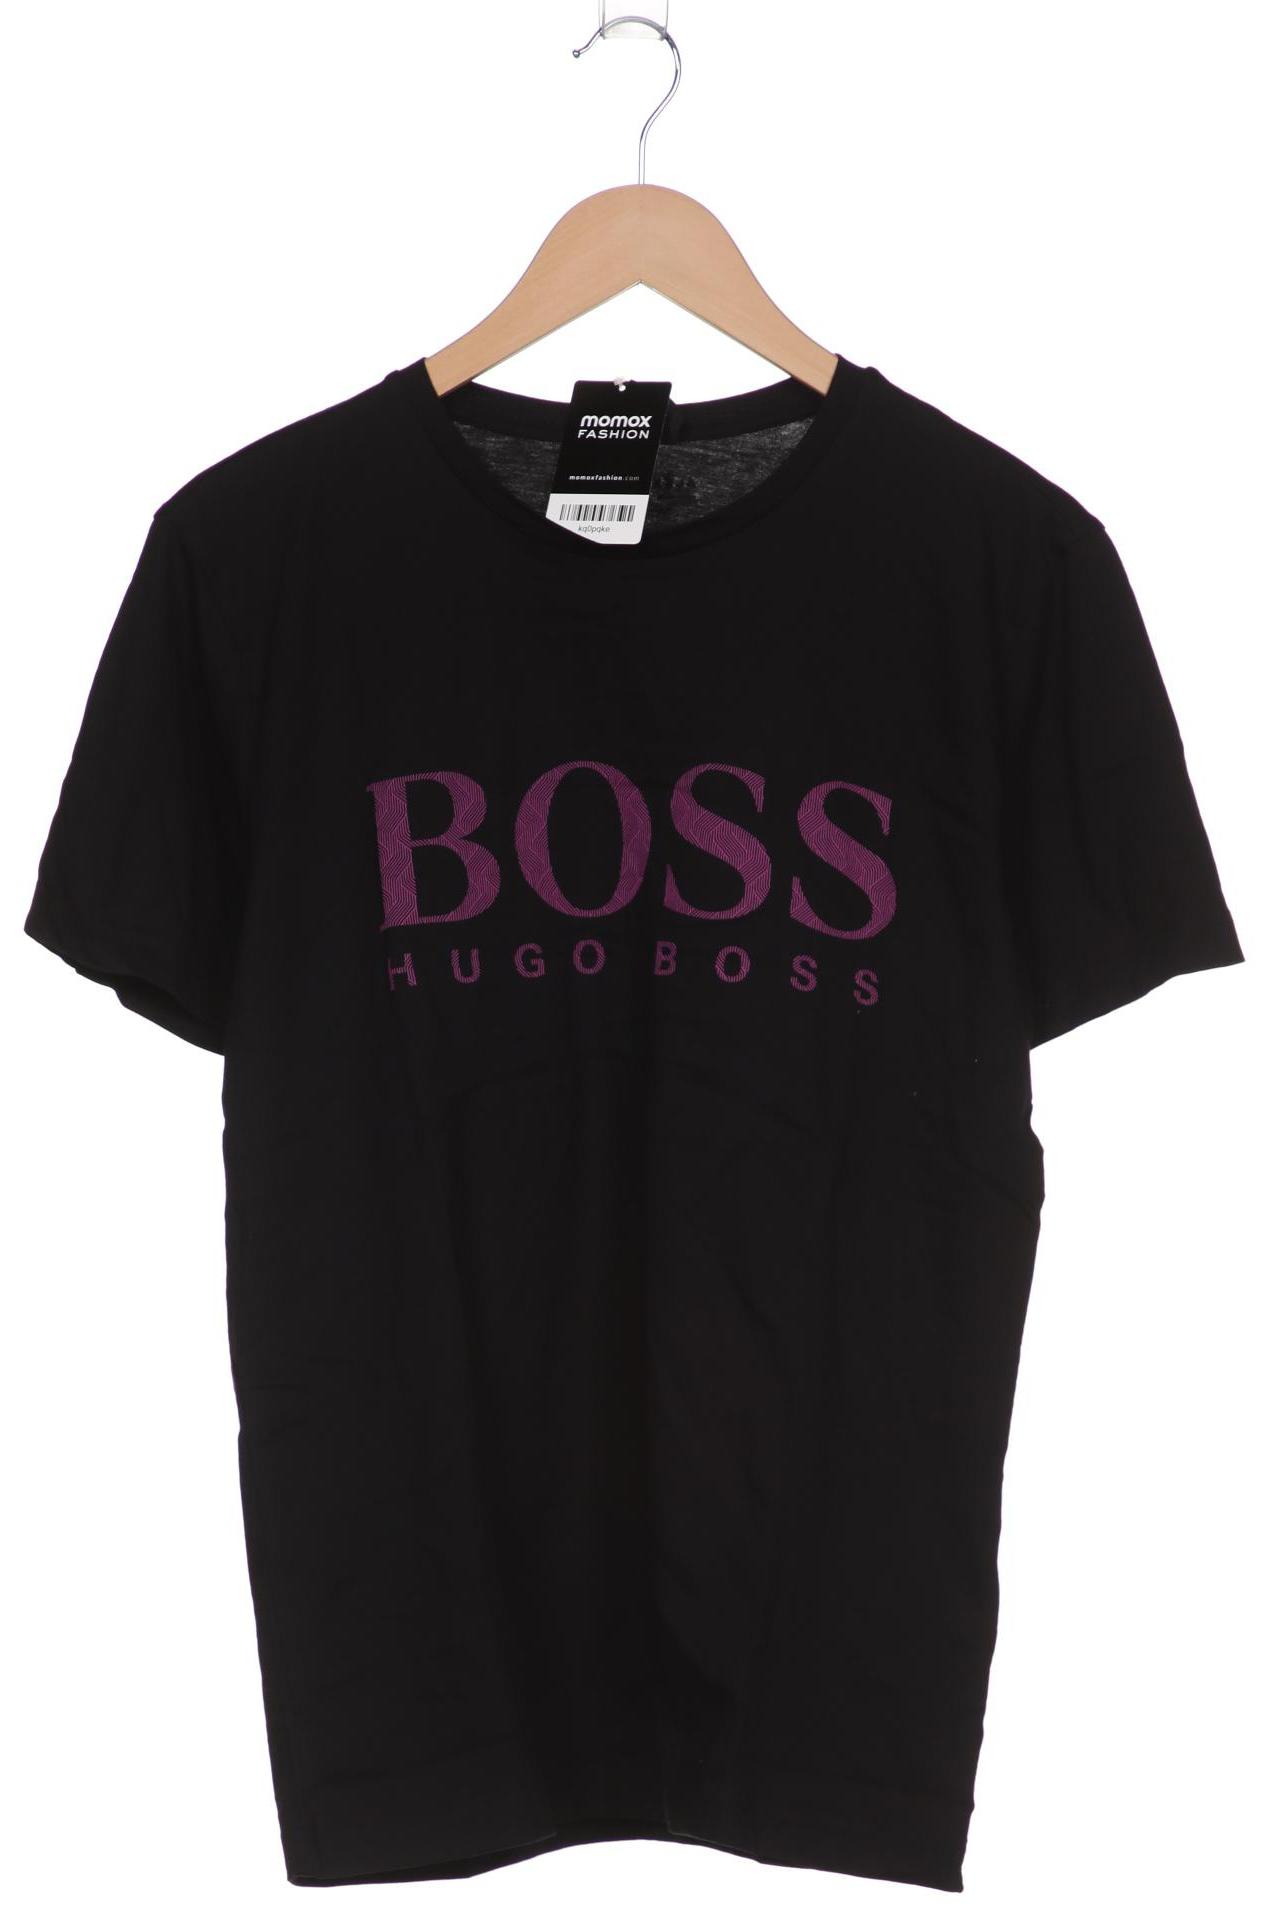 BOSS by Hugo Boss Herren T-Shirt, schwarz von BOSS by Hugo Boss